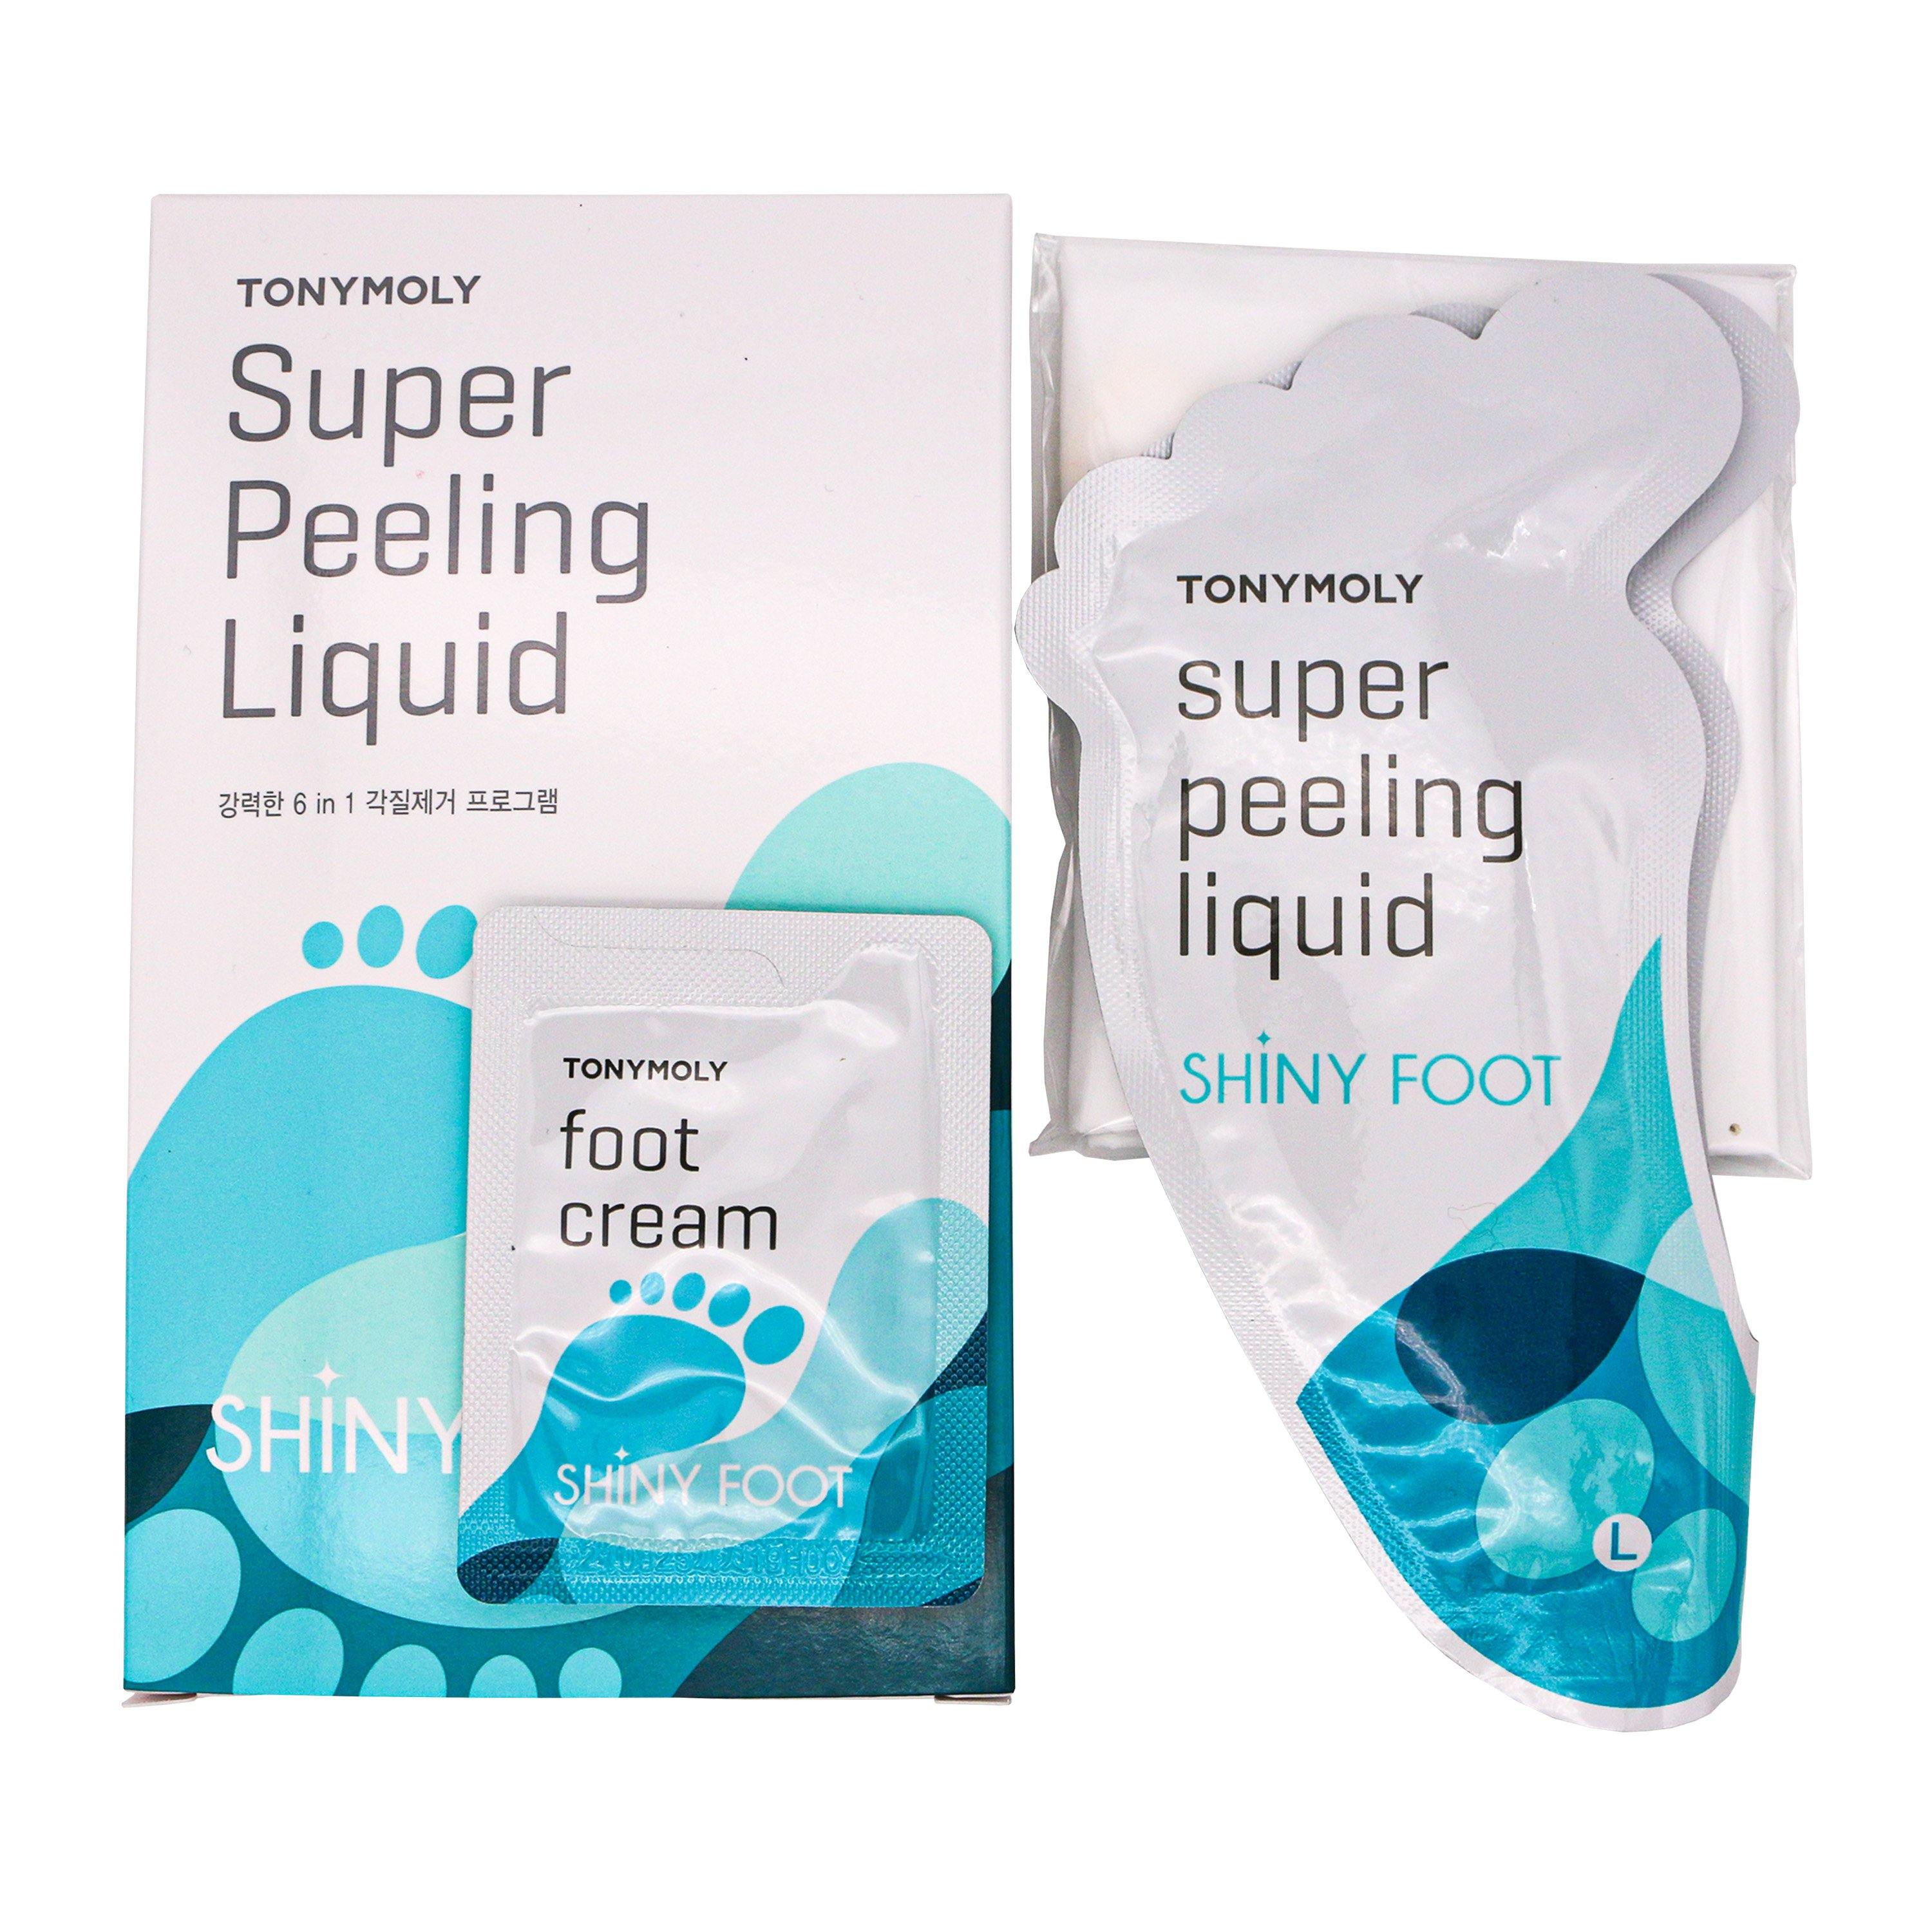 TONYMOLY Shiny Foot Super Peeling Liquid - Peeling Foot Mask -Remove Rough Calluses - TONYMOLY OFFICIAL